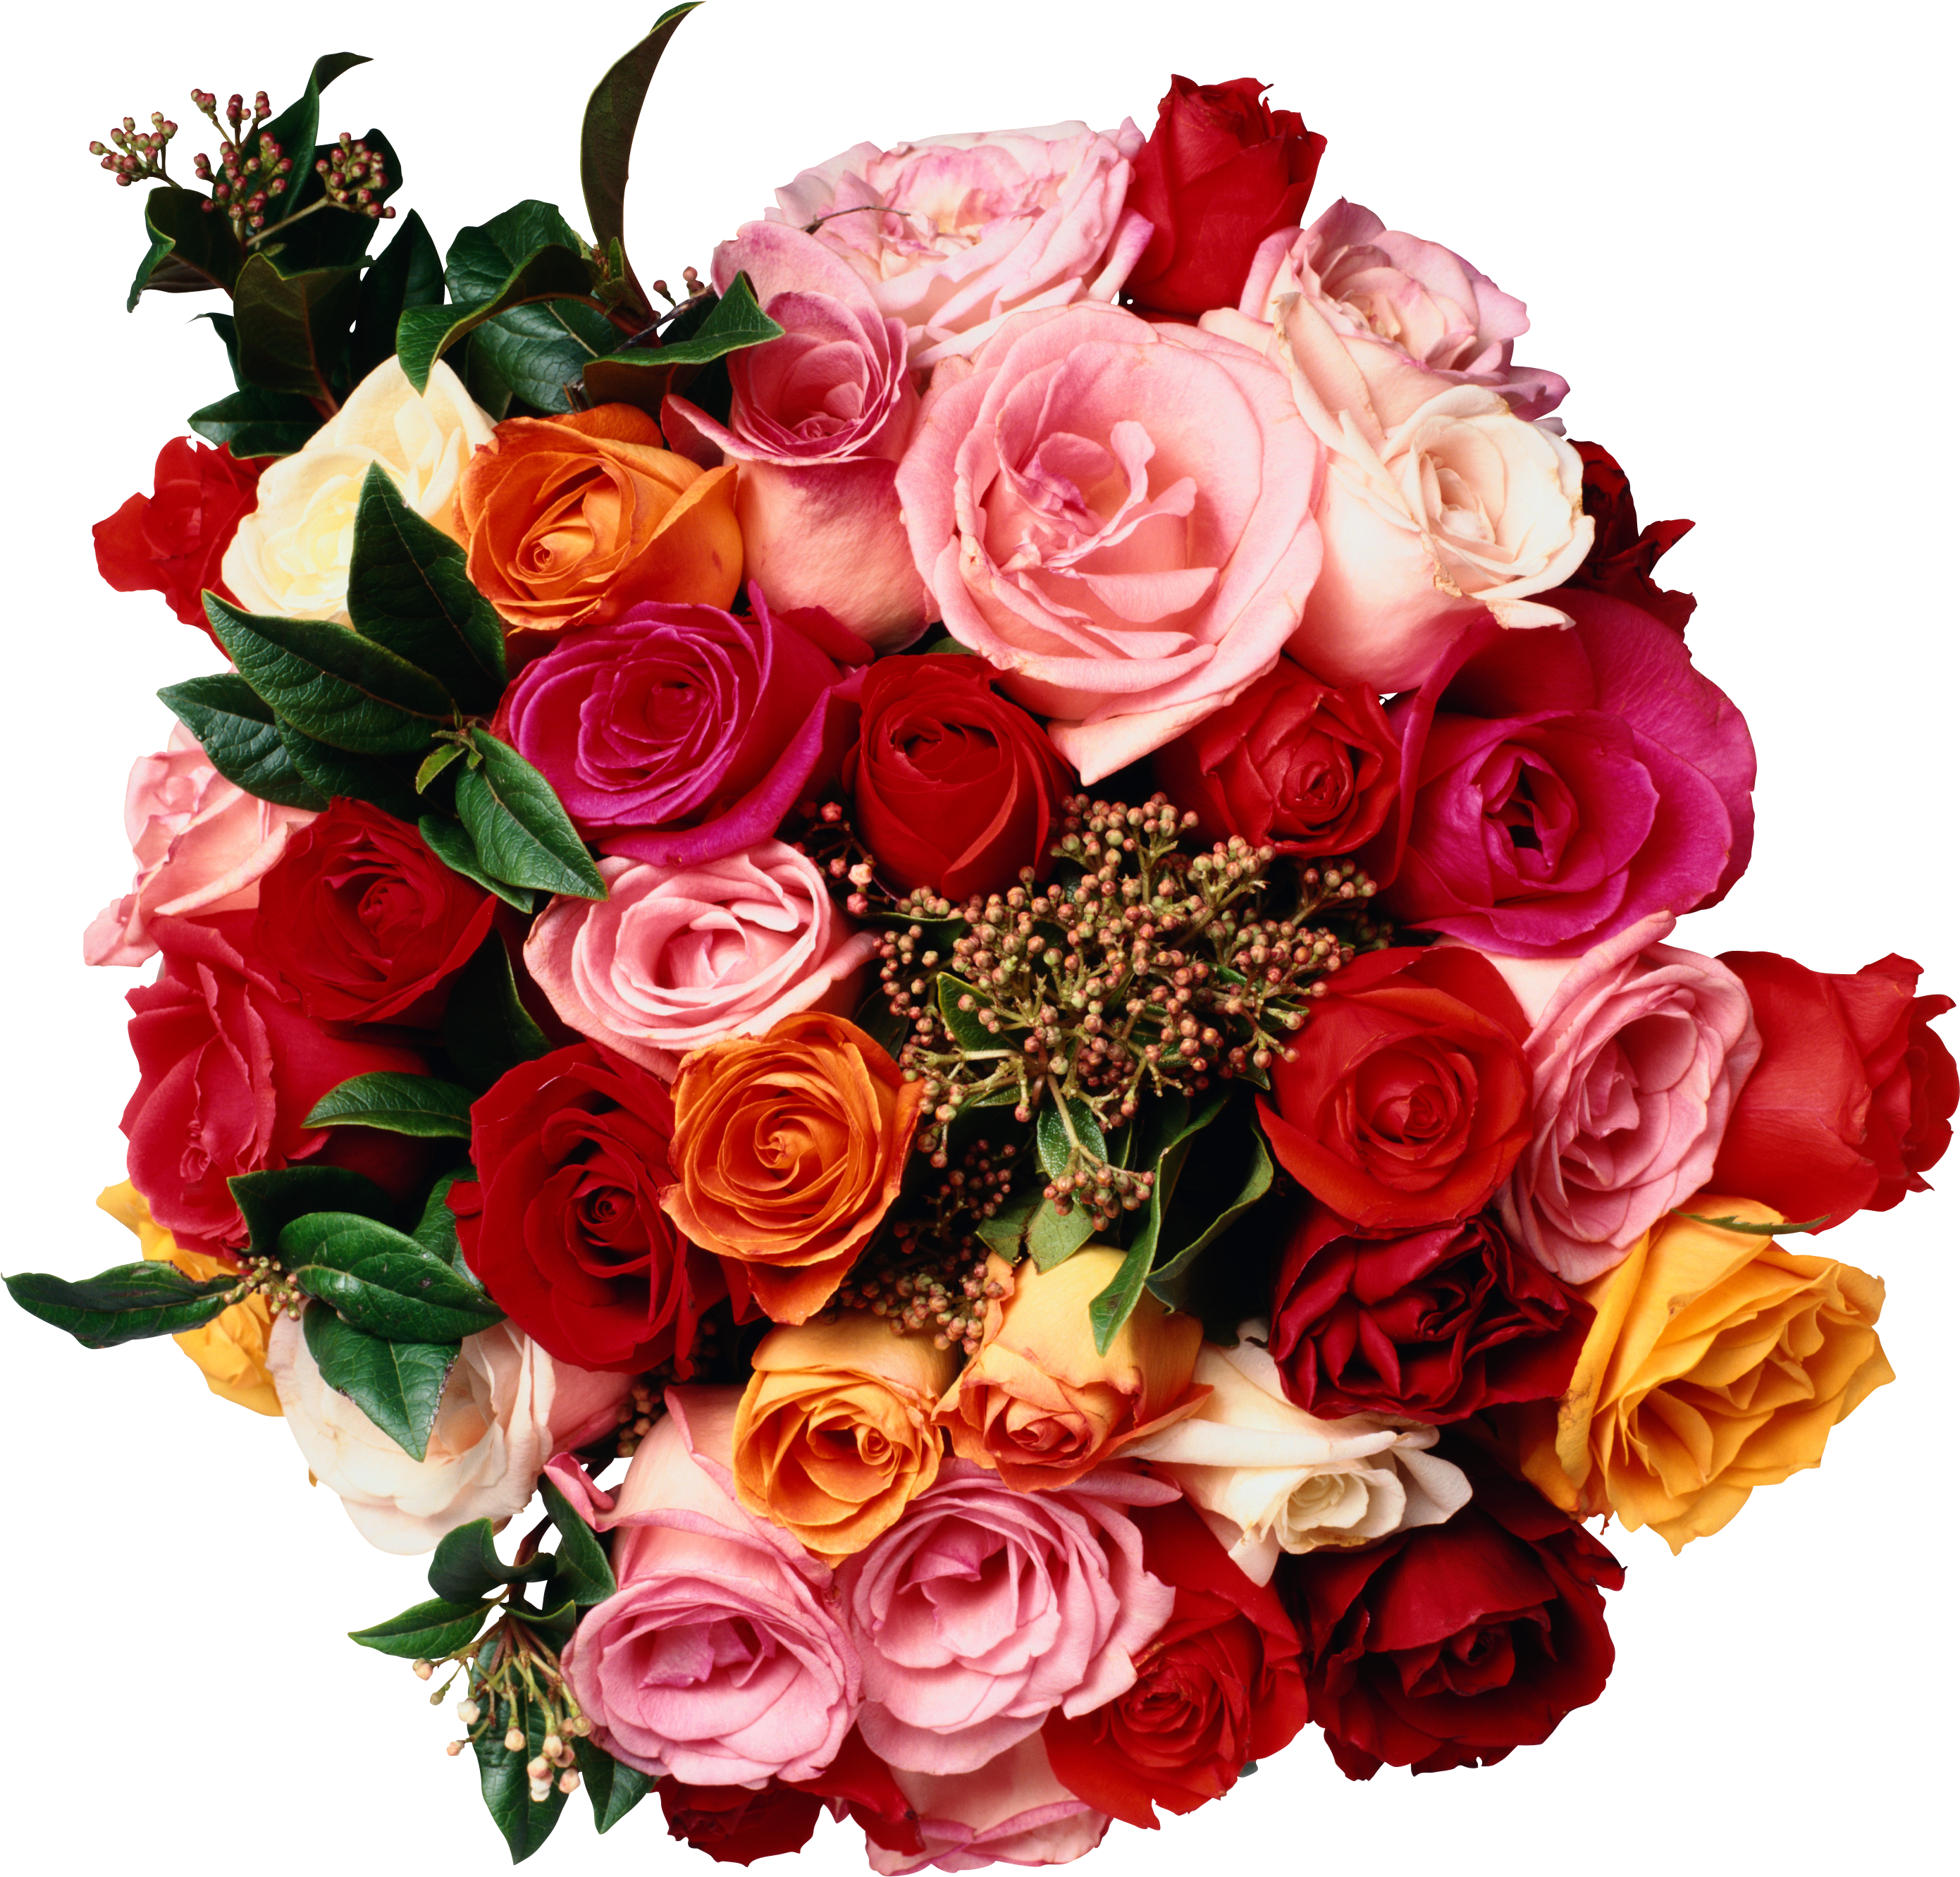 Teach Yourself Flower Arranging, New Edition Flower - Get Started With Flower Arranging By Judith Blacklock (2835x2835)